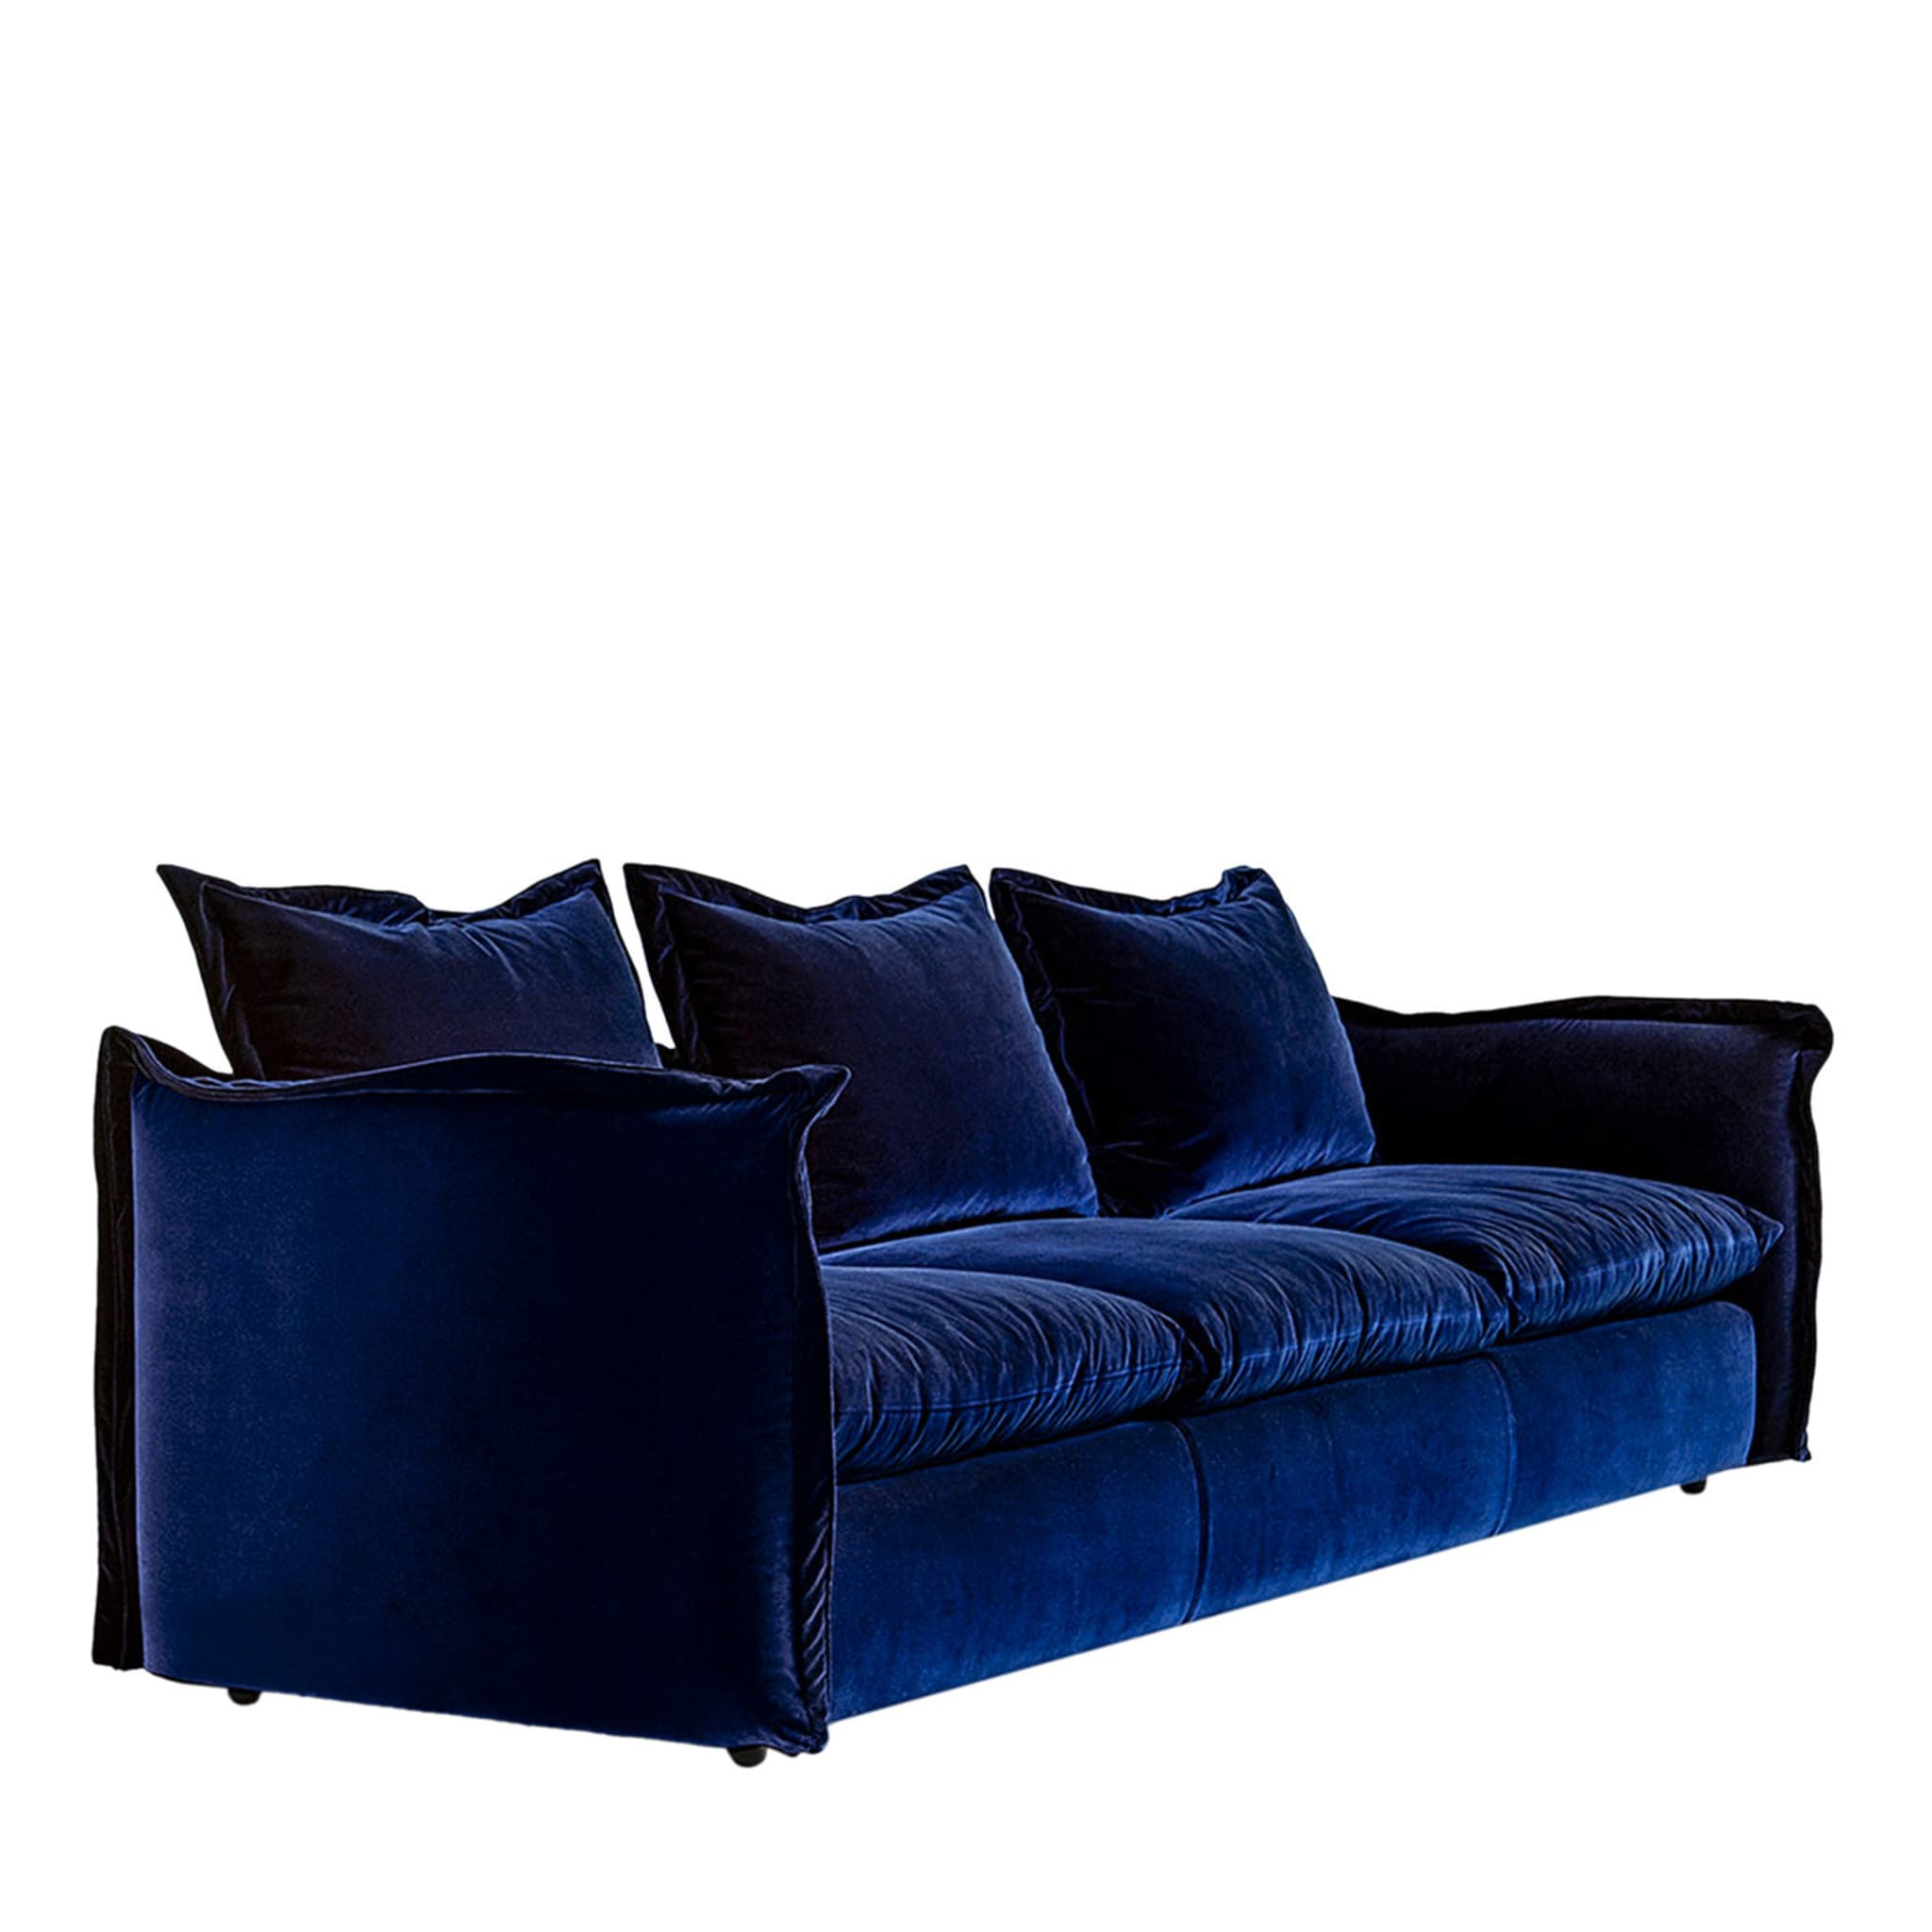 Knit Midnight-Blue Sofa by Enrico Cesana - Main view